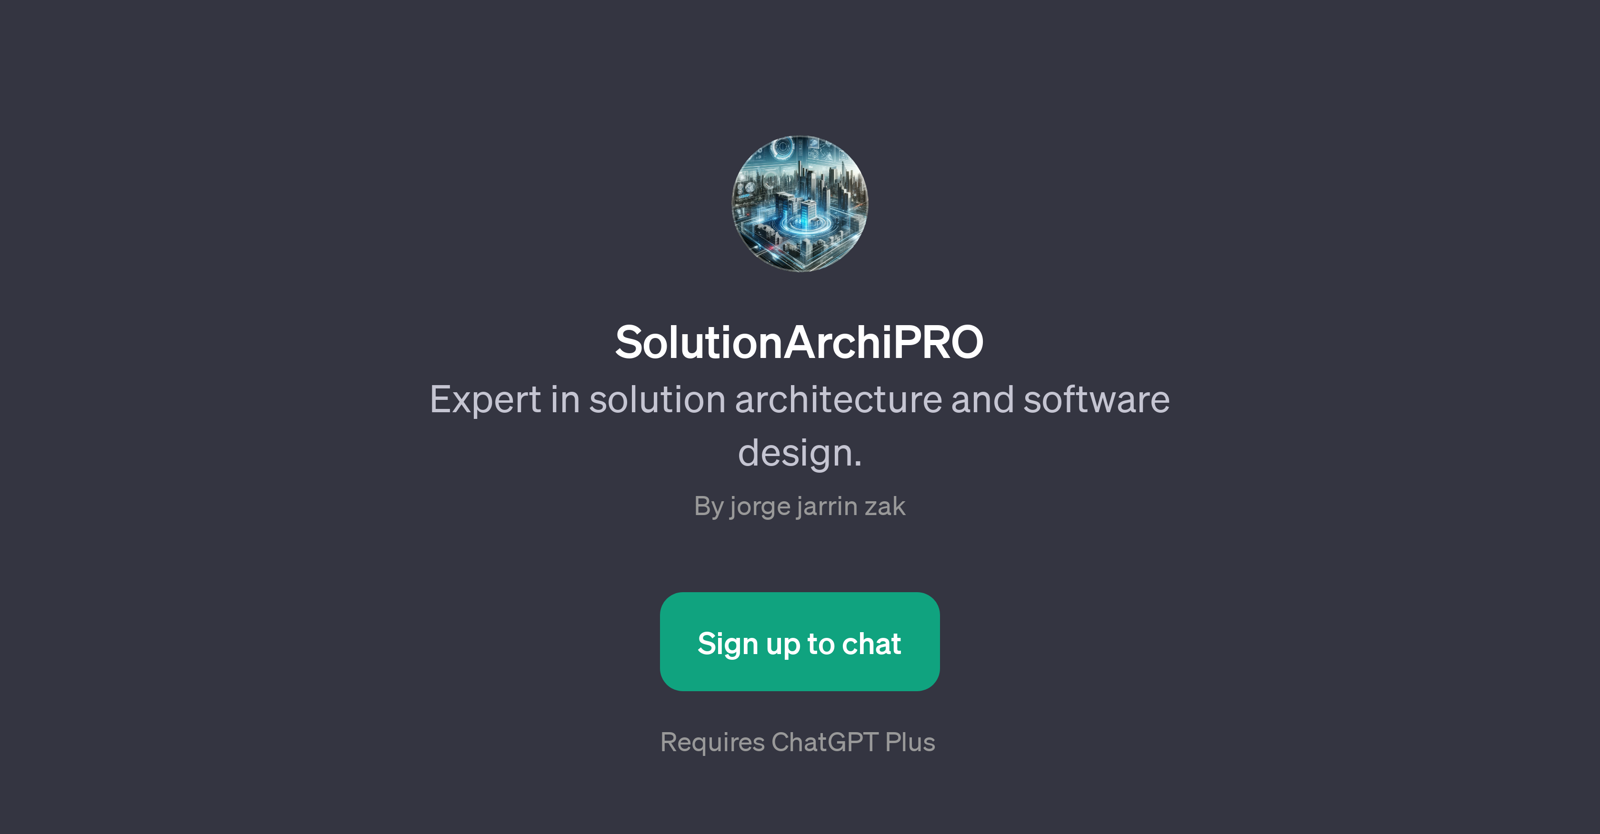 SolutionArchiPRO website